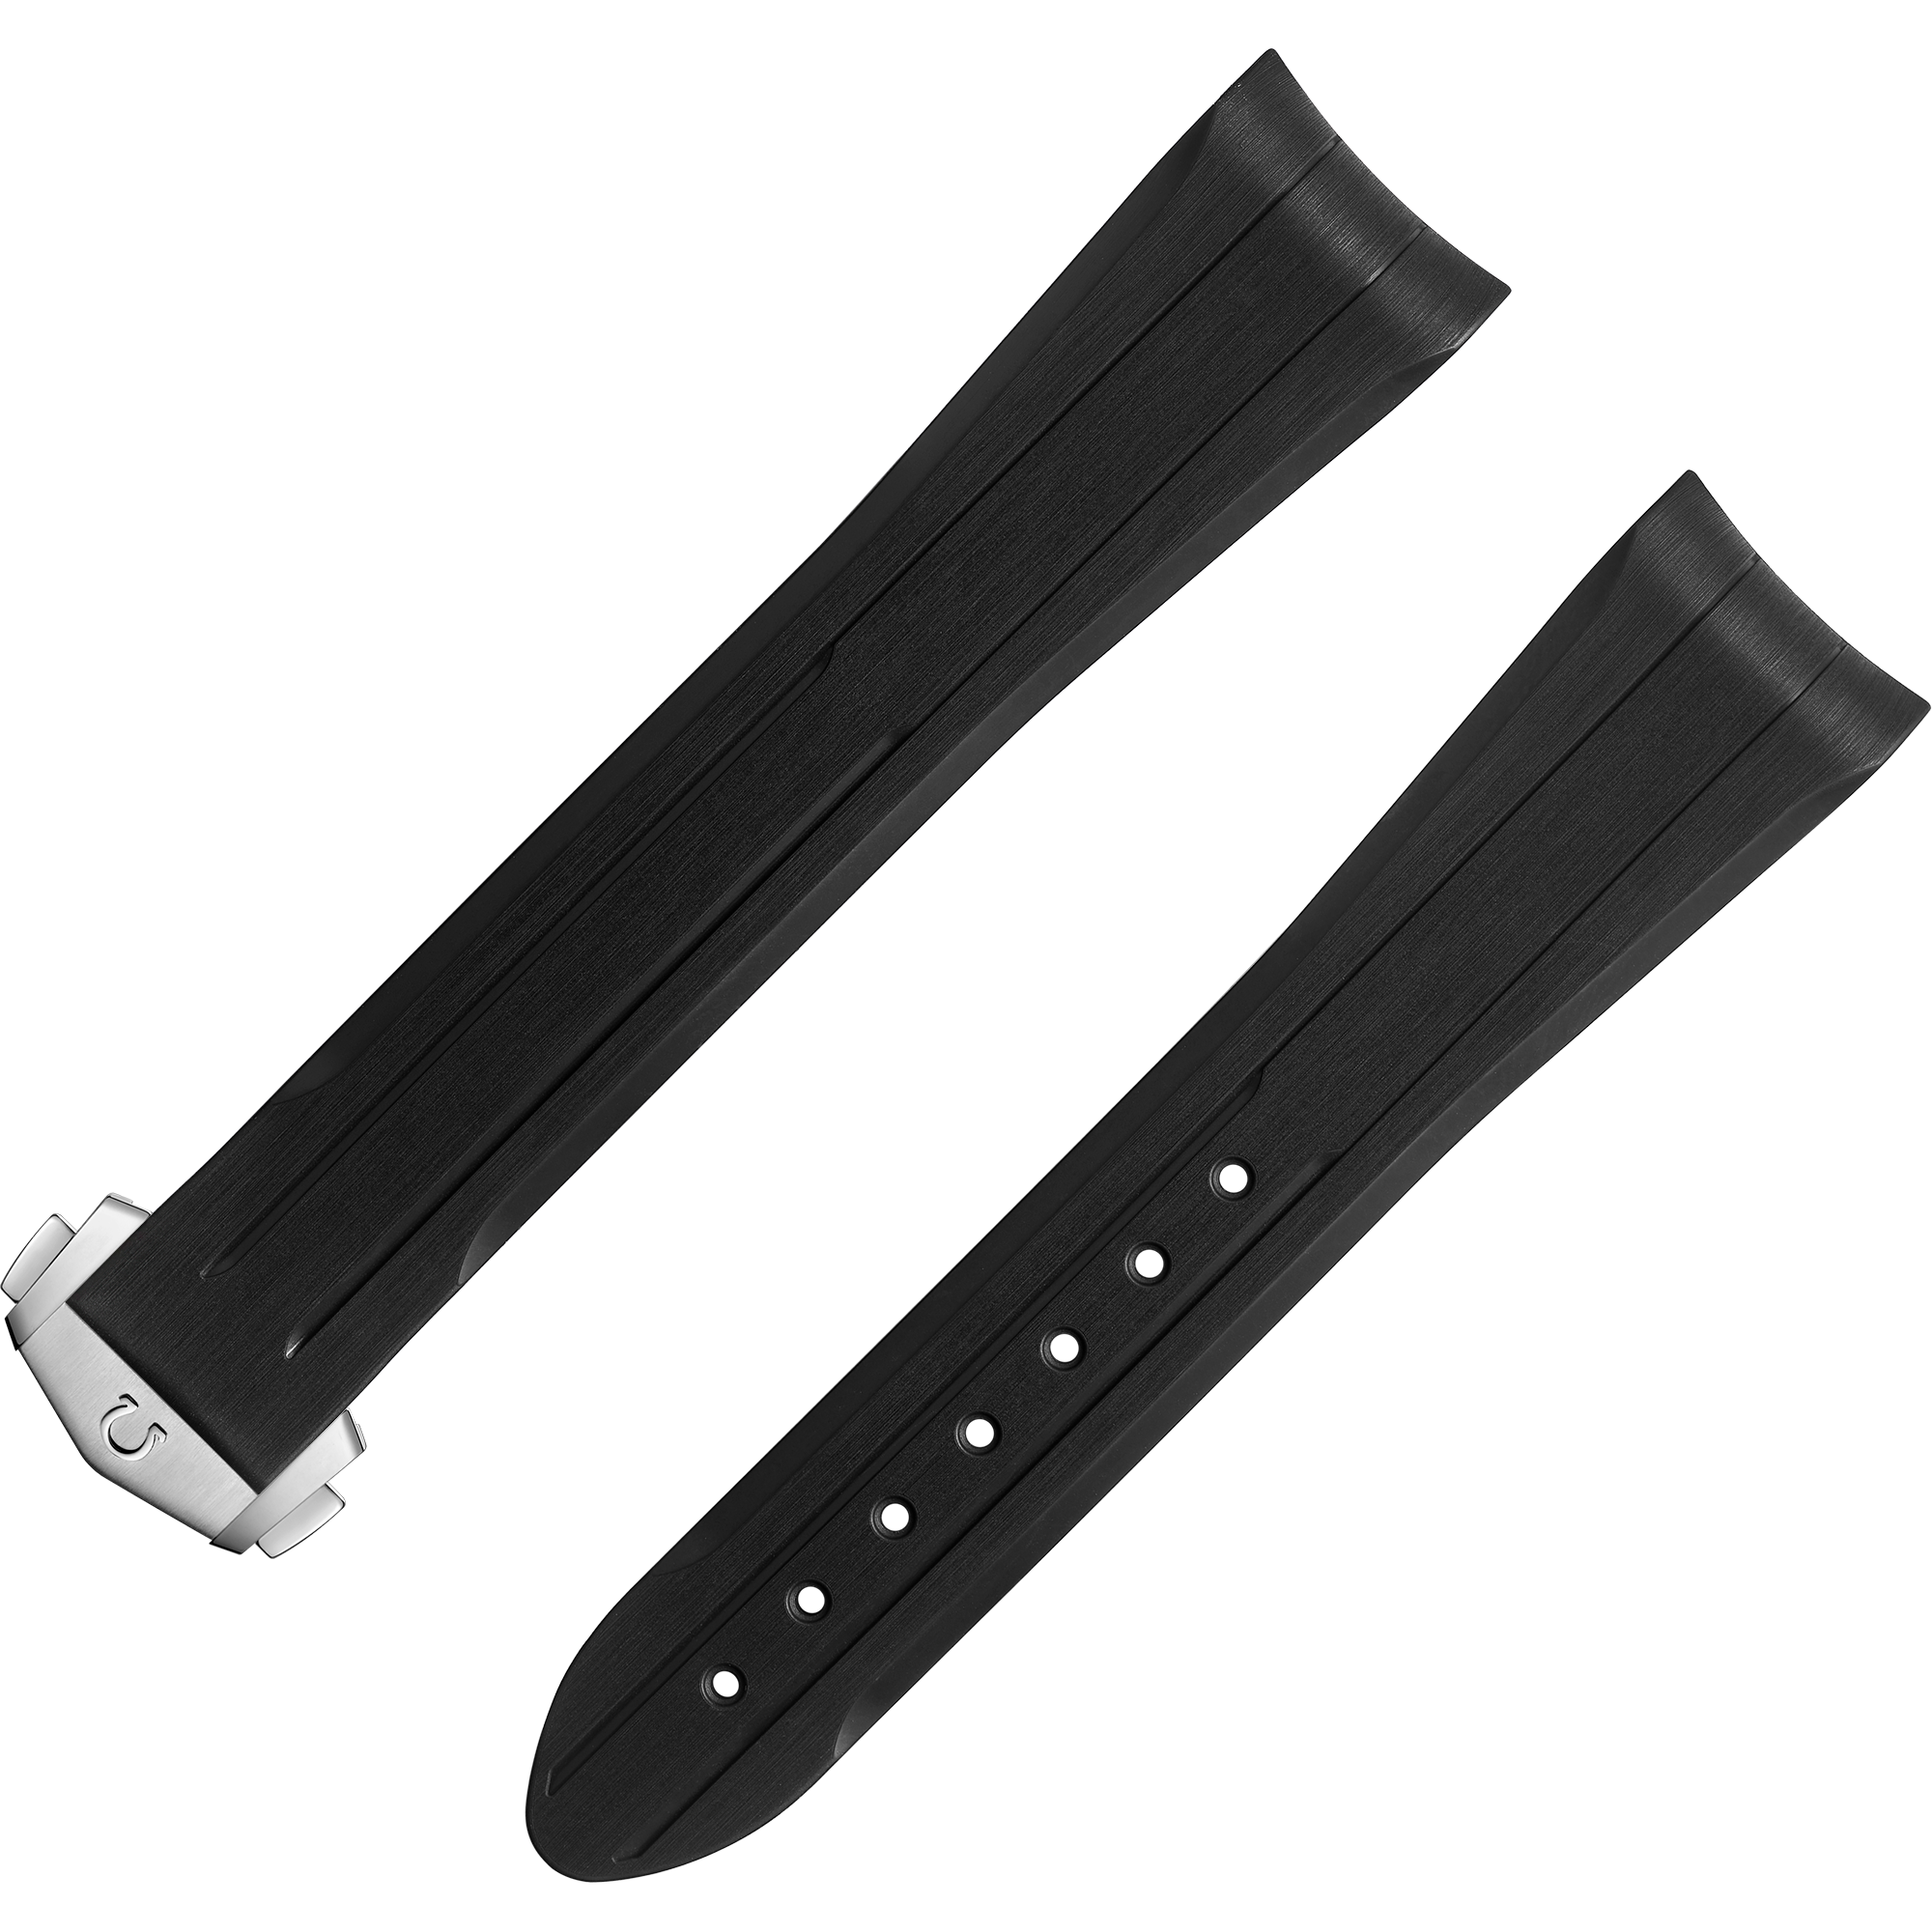 Cinturino a due pezzi - Cinturino in caucciù nero con fibbia déployante per lo Speedmaster Moonwatch - 032Z017245